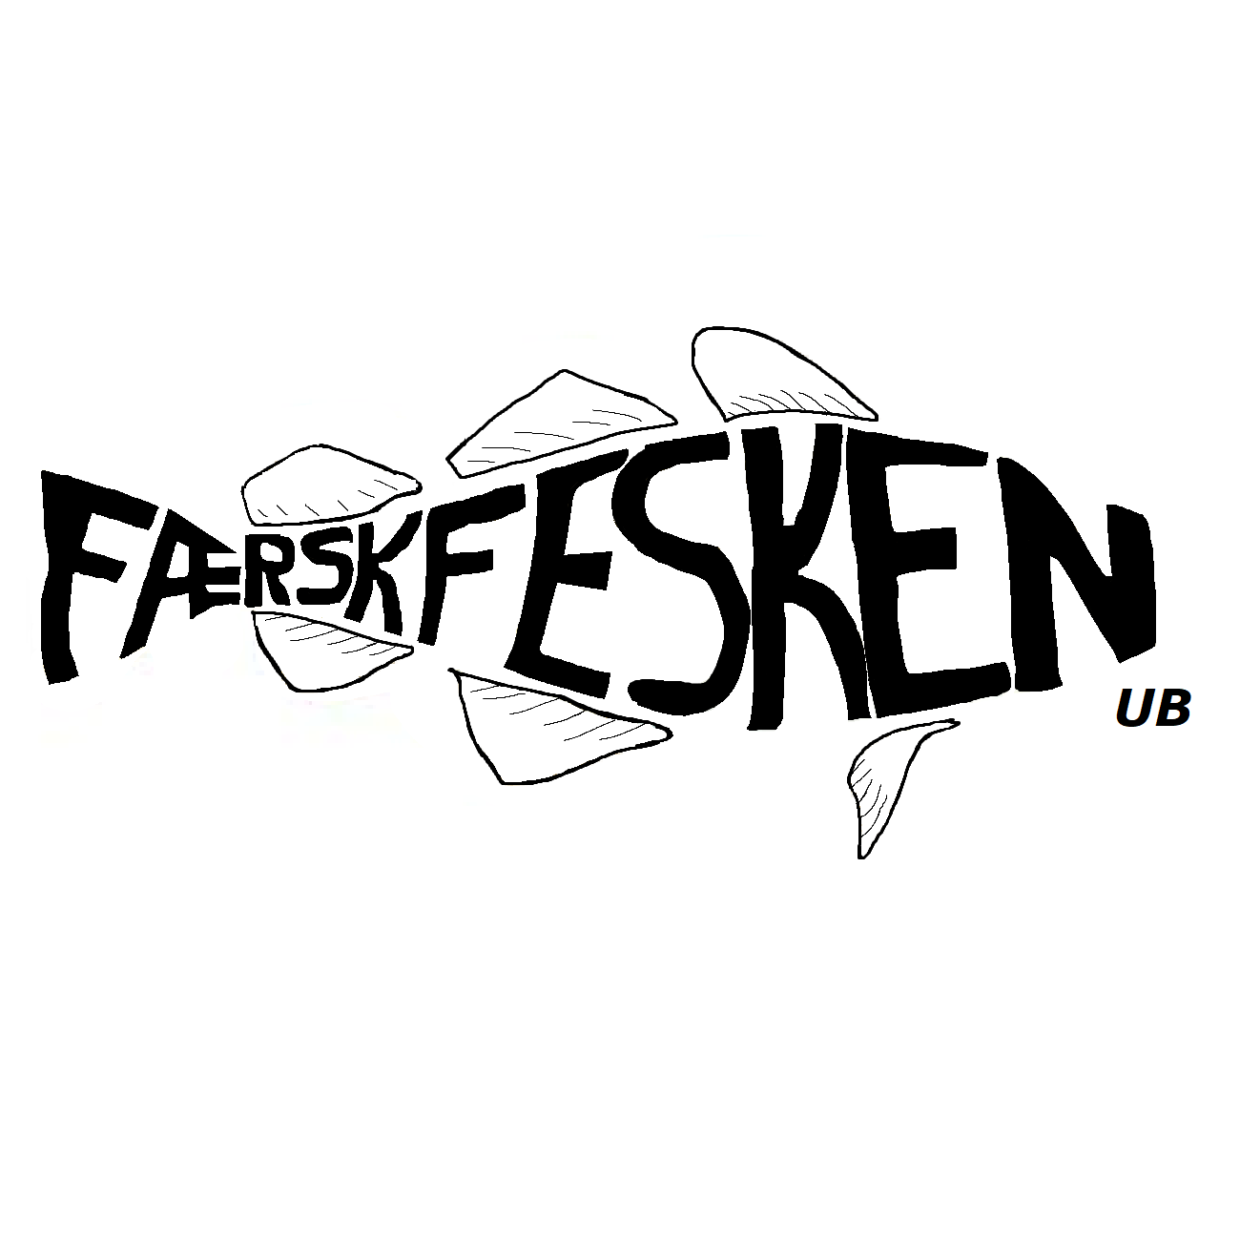 Faerskfesken Logo